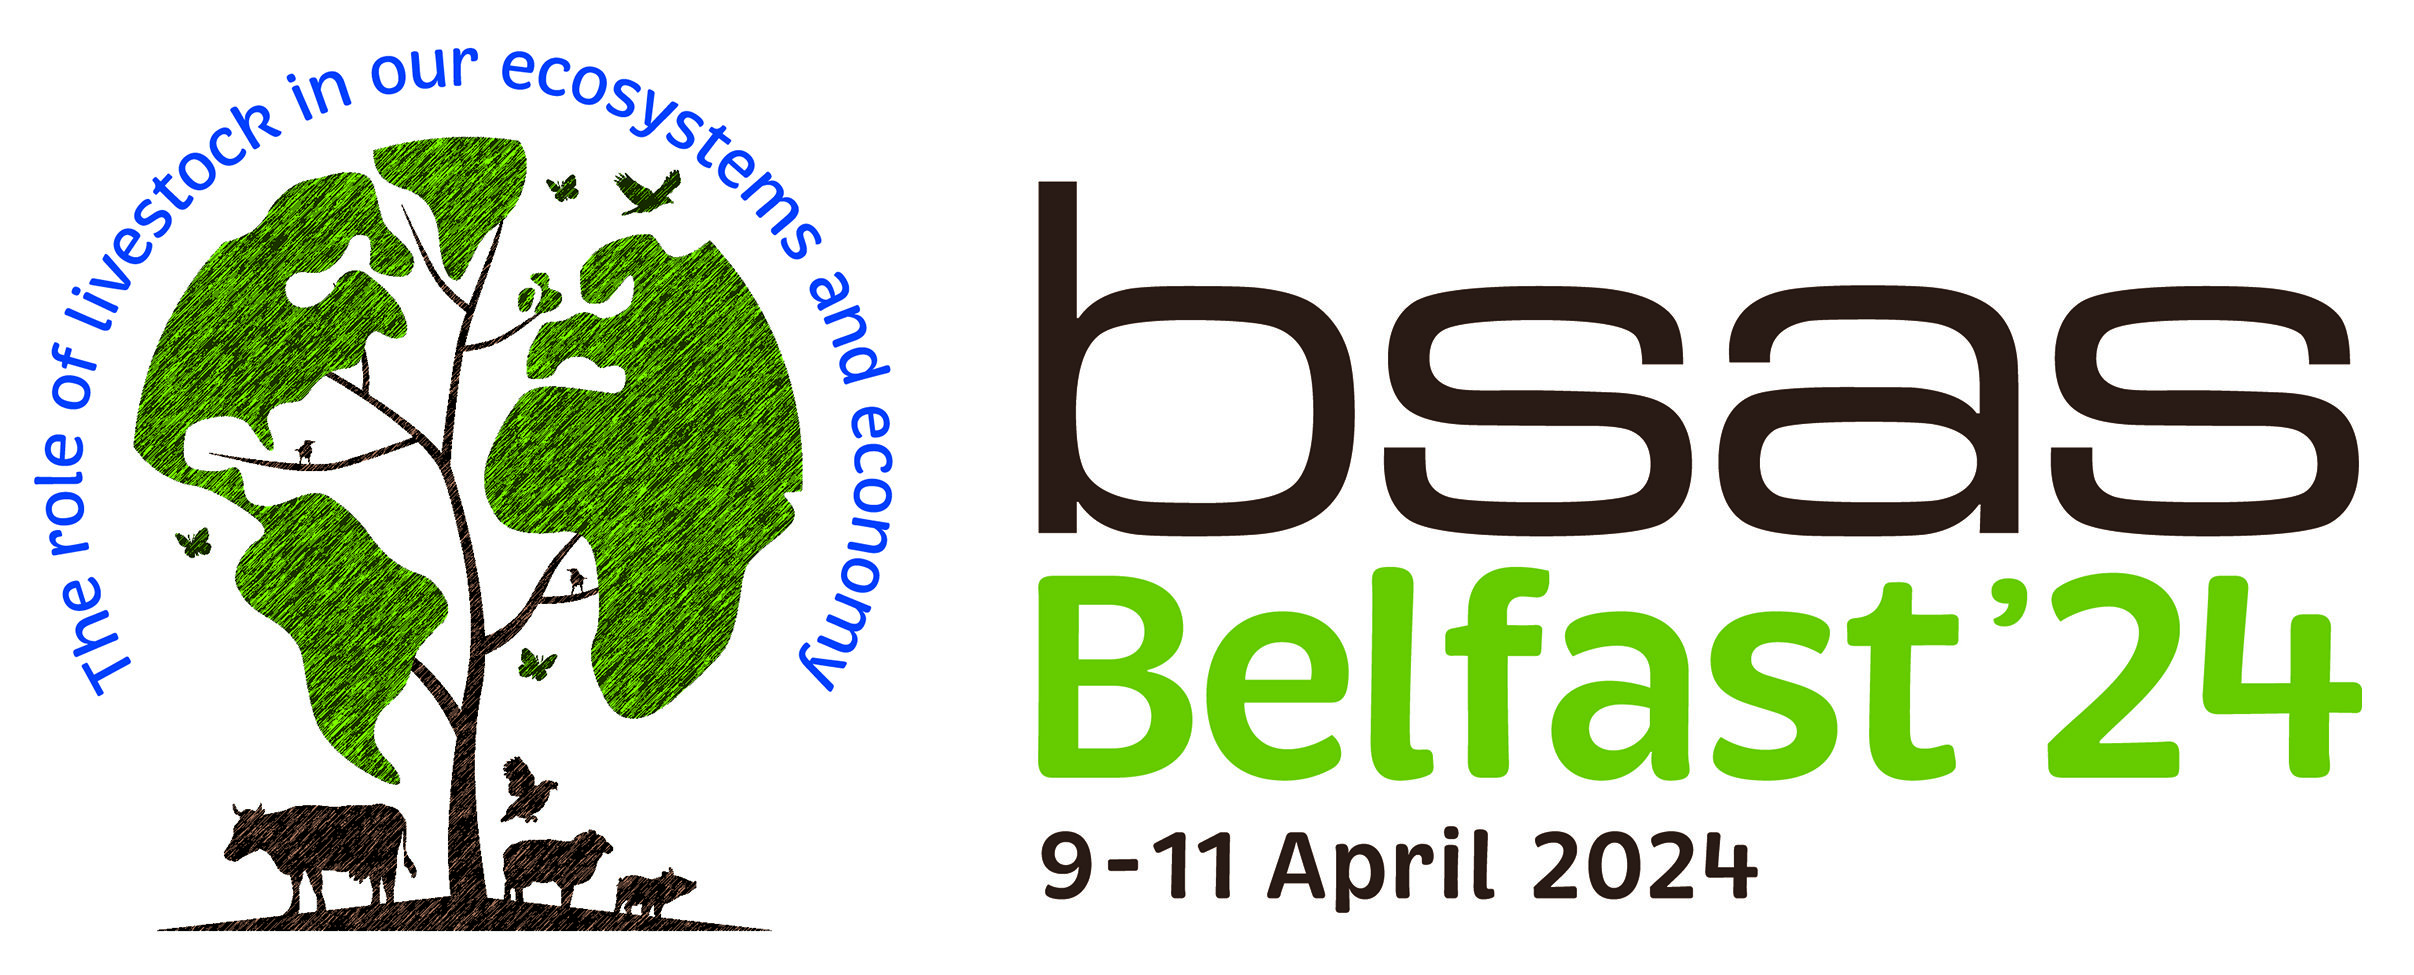 BSAS 24 Conference Logo LANDSCAPE